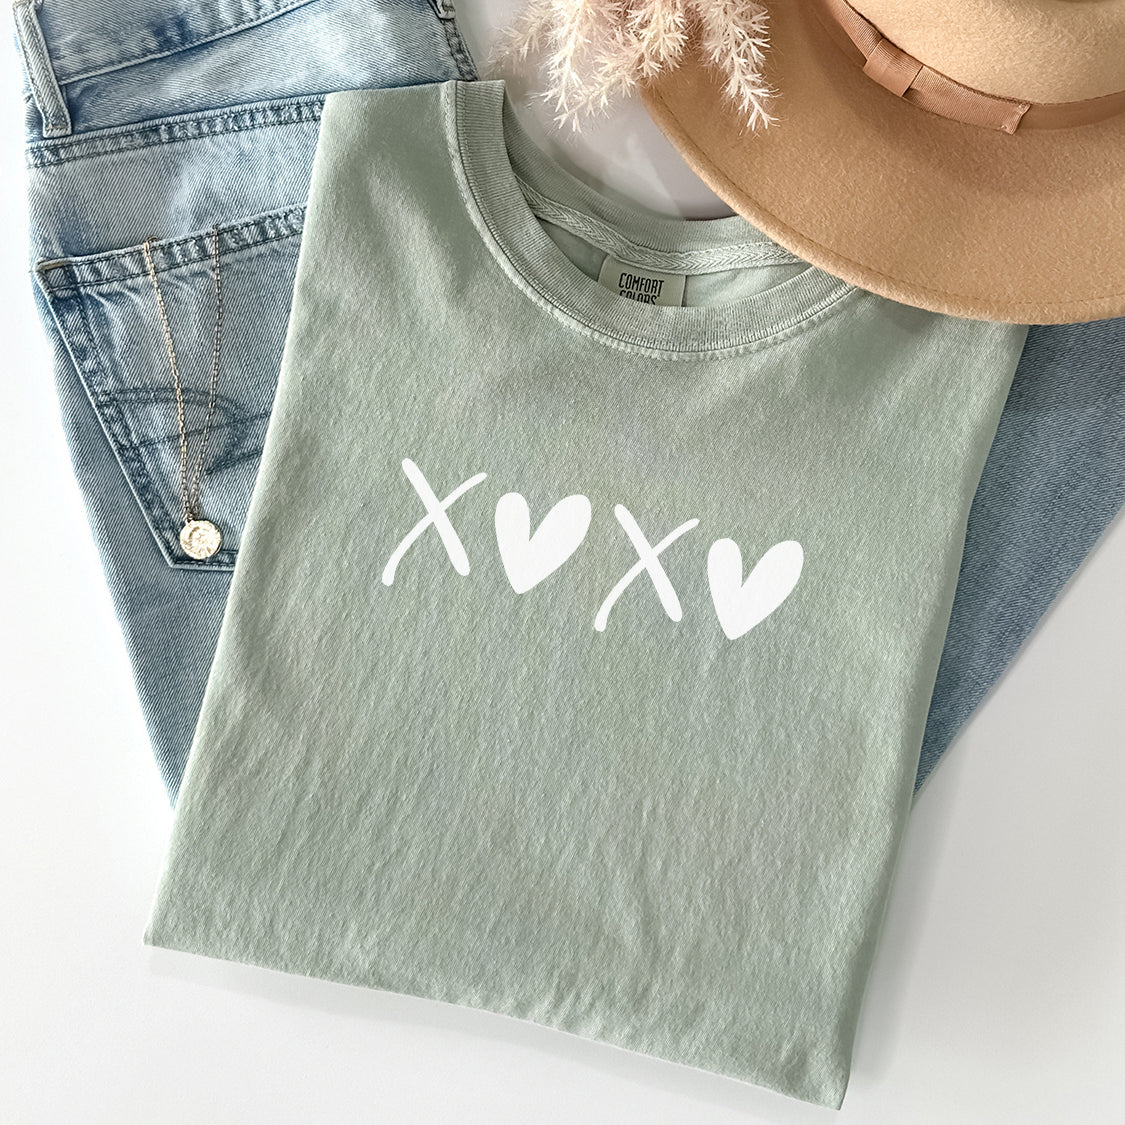 XOXO T-shirt - Love  Minimal Design Printed T-Shirt